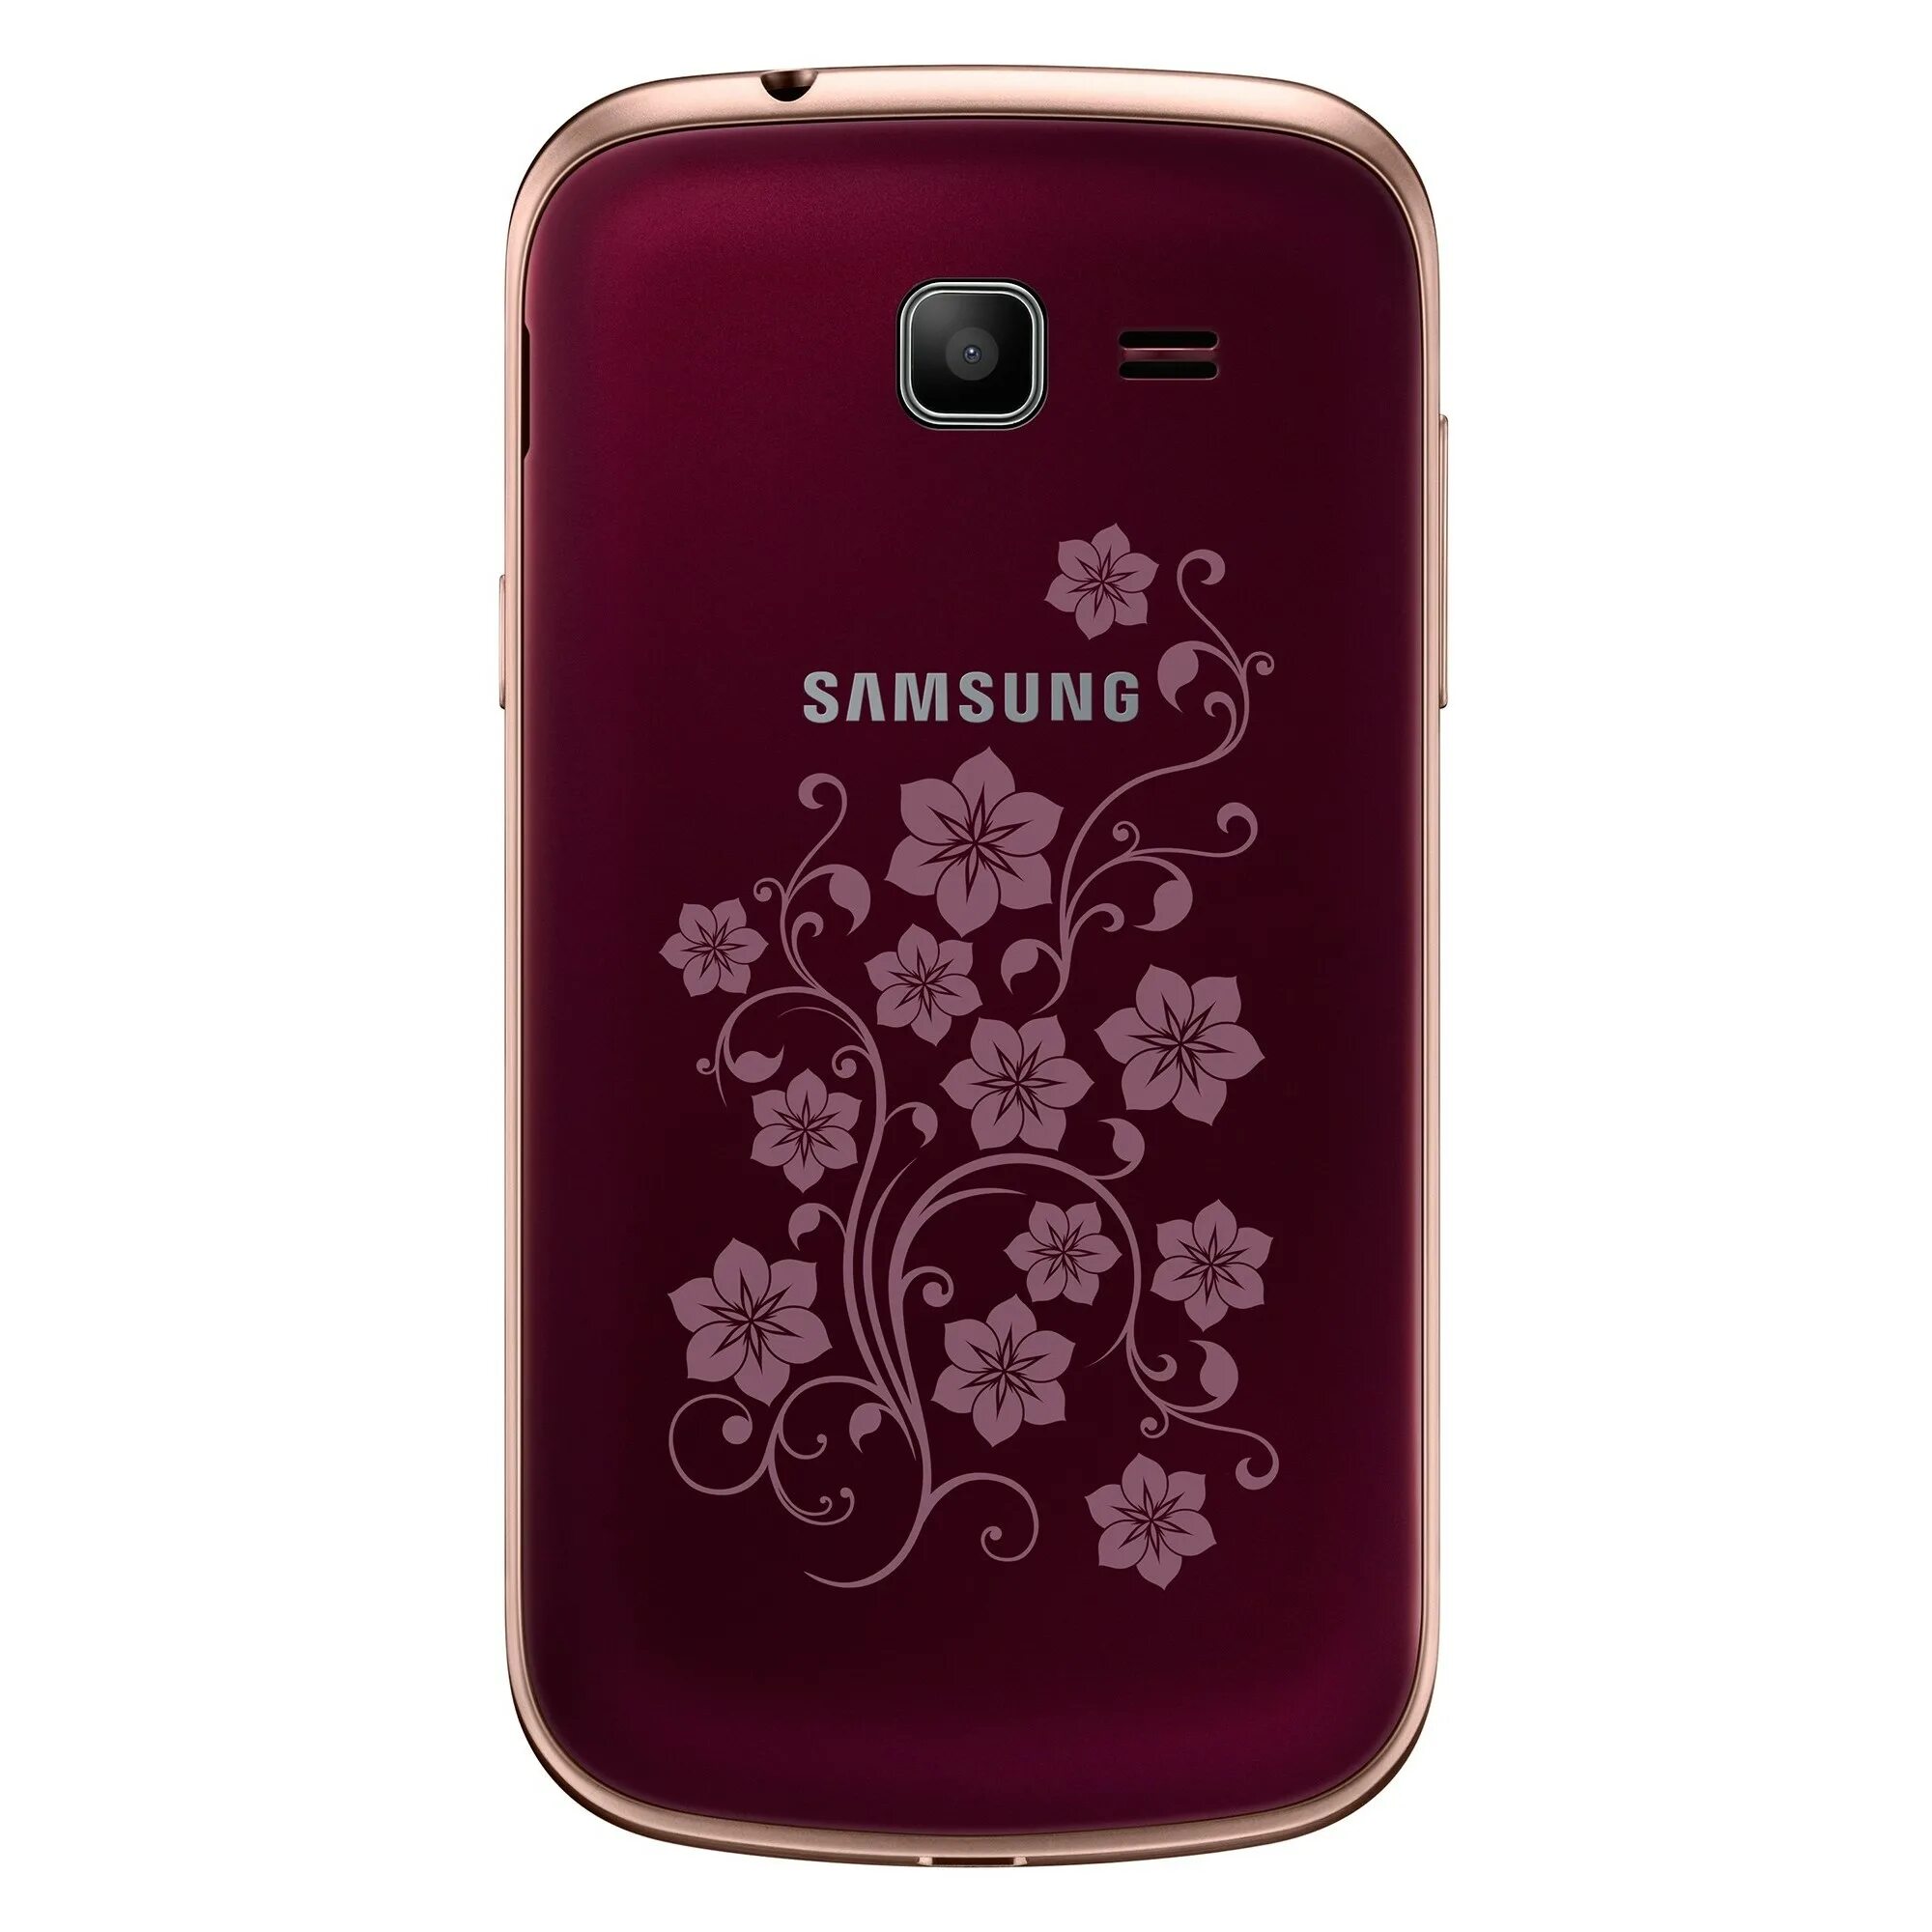 Samsung Galaxy trend la fleur. Samsung Galaxy gt s7390. Samsung trend gt-s7390. Смартфон Samsung Galaxy trend gt-s7390. Самсунг la fleur